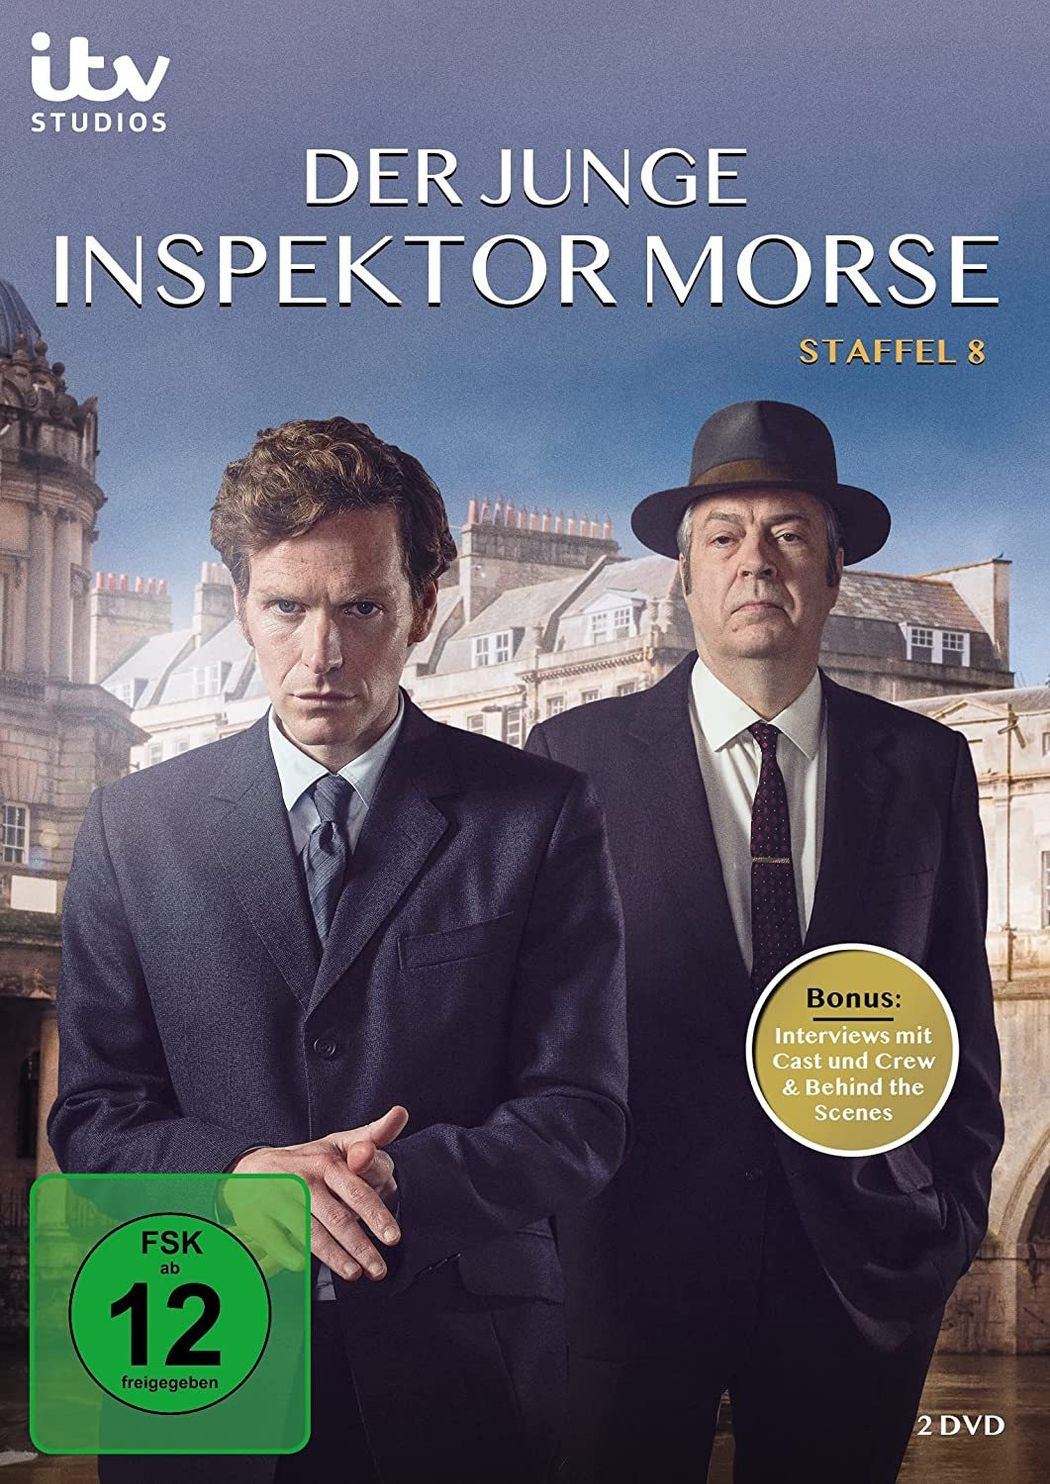 Der junge Inspektor Morse - Staffel 8 DVD | Weltbild.ch